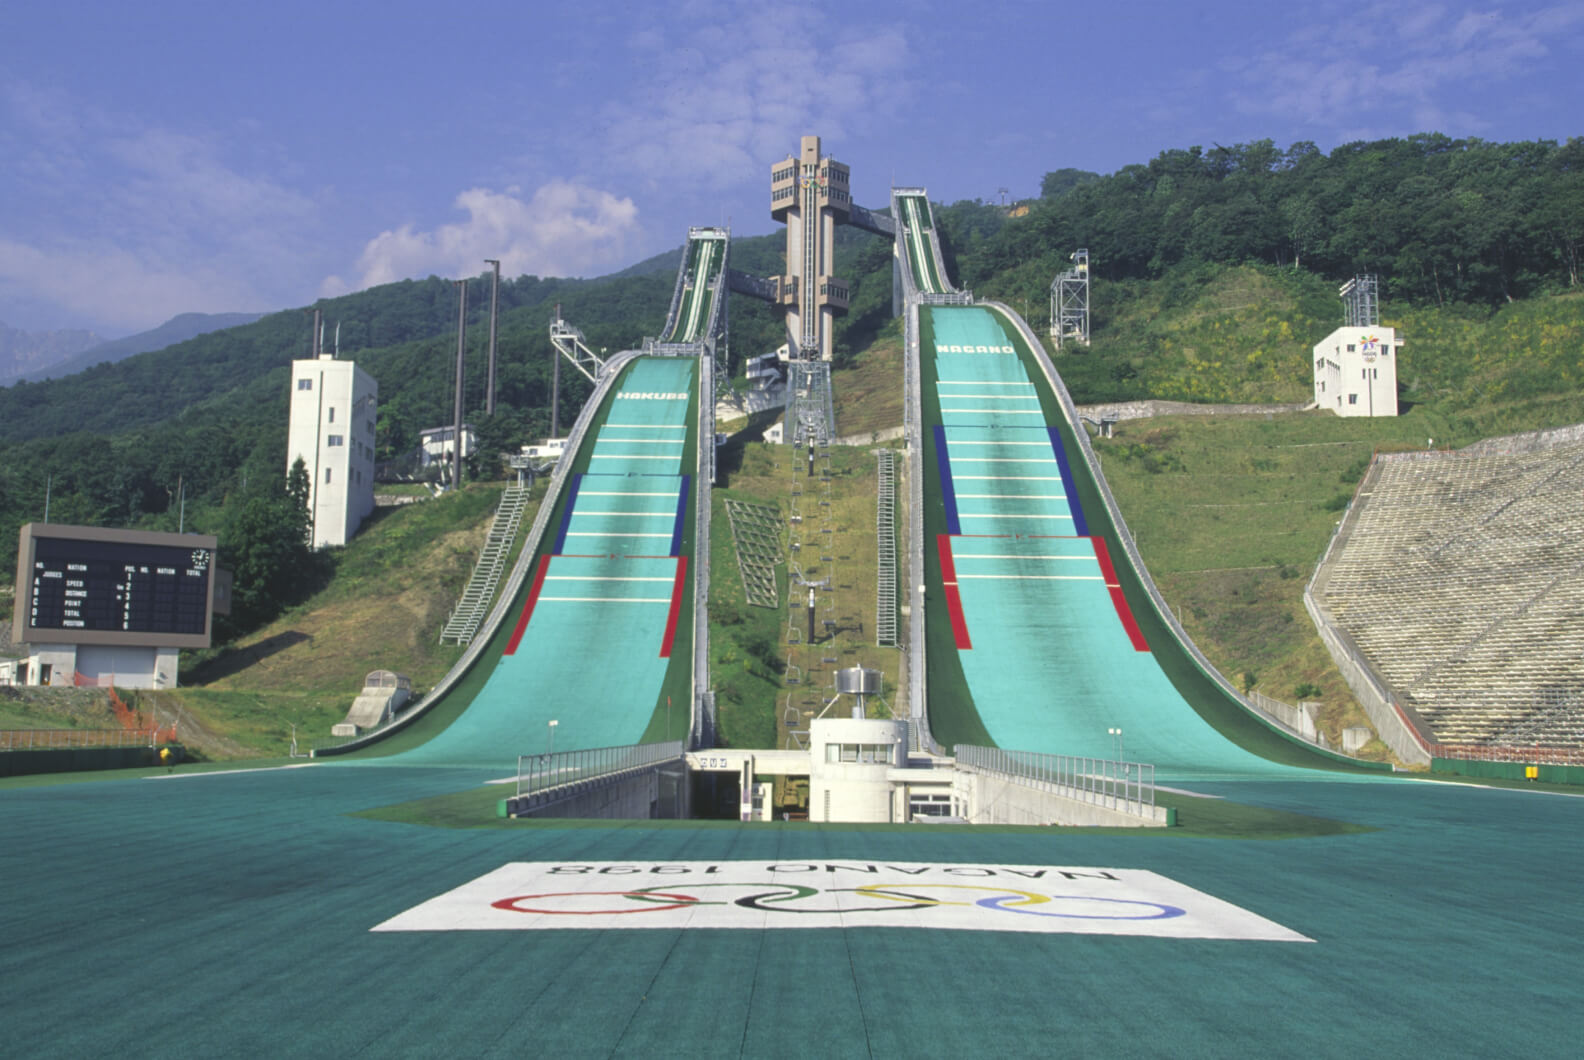 Hakuba Ski Jumping Stadium